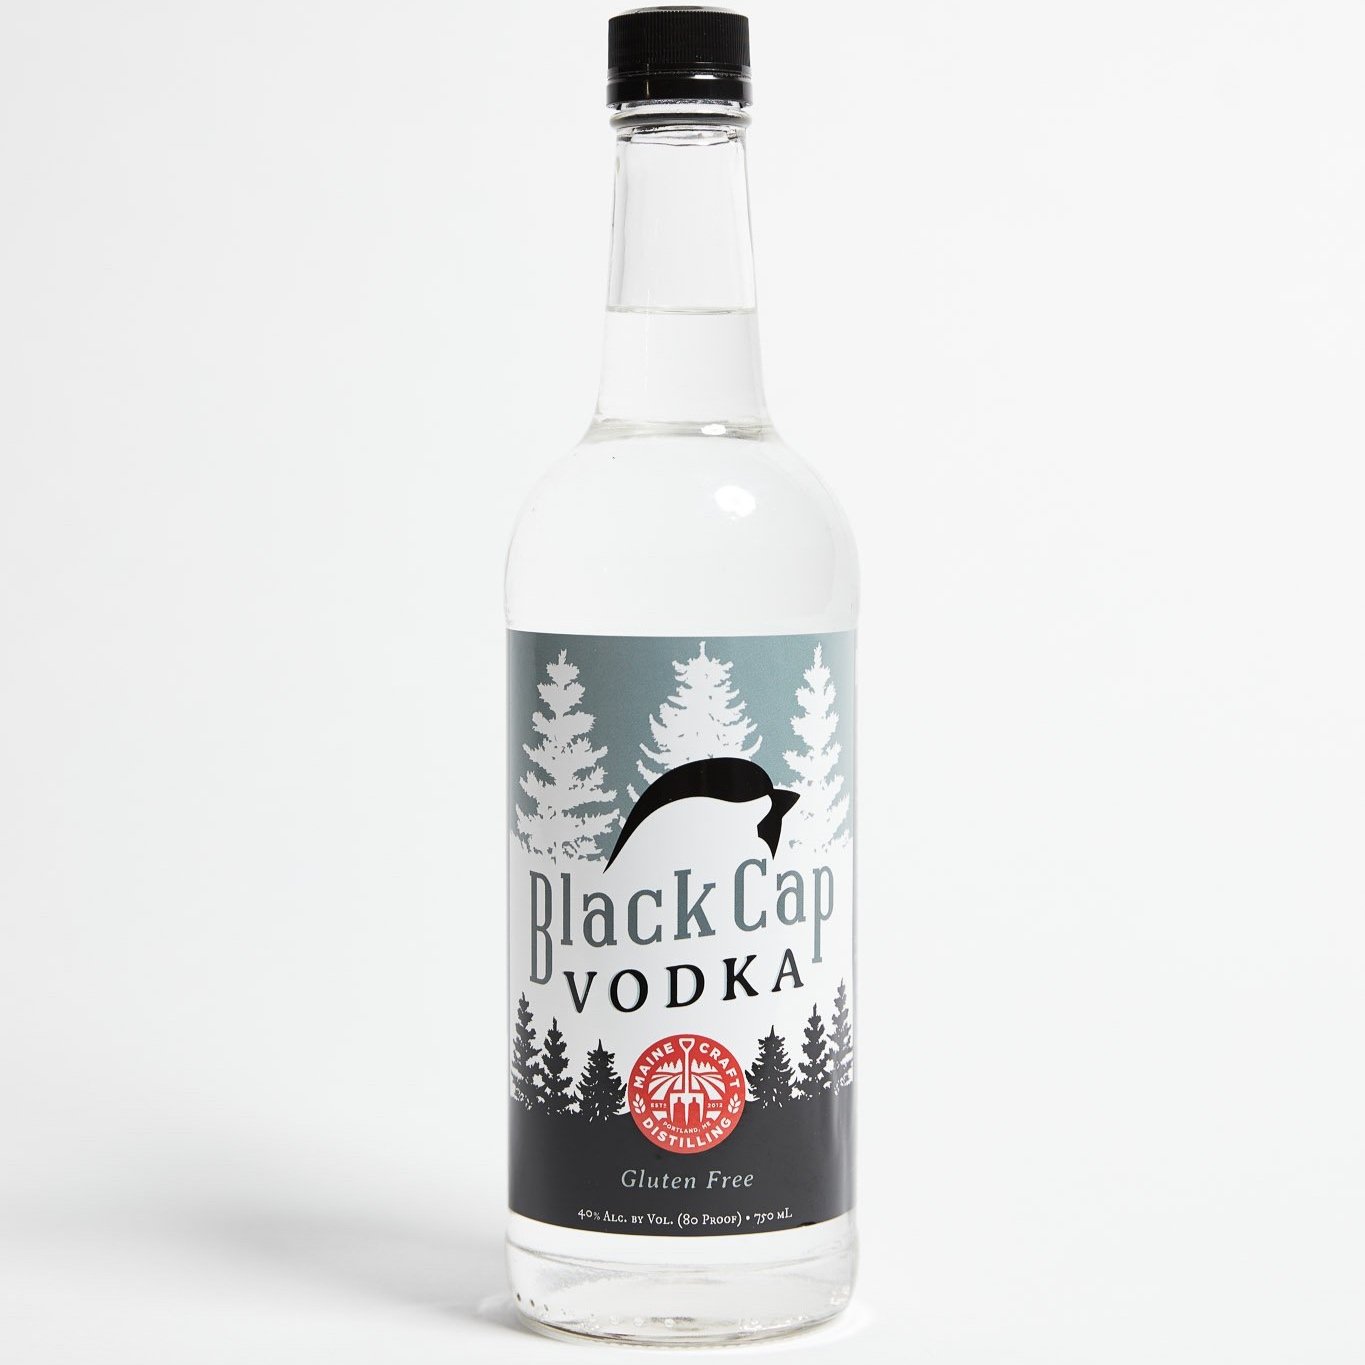 BLACK CAP VODKA — Maine Craft Distilling